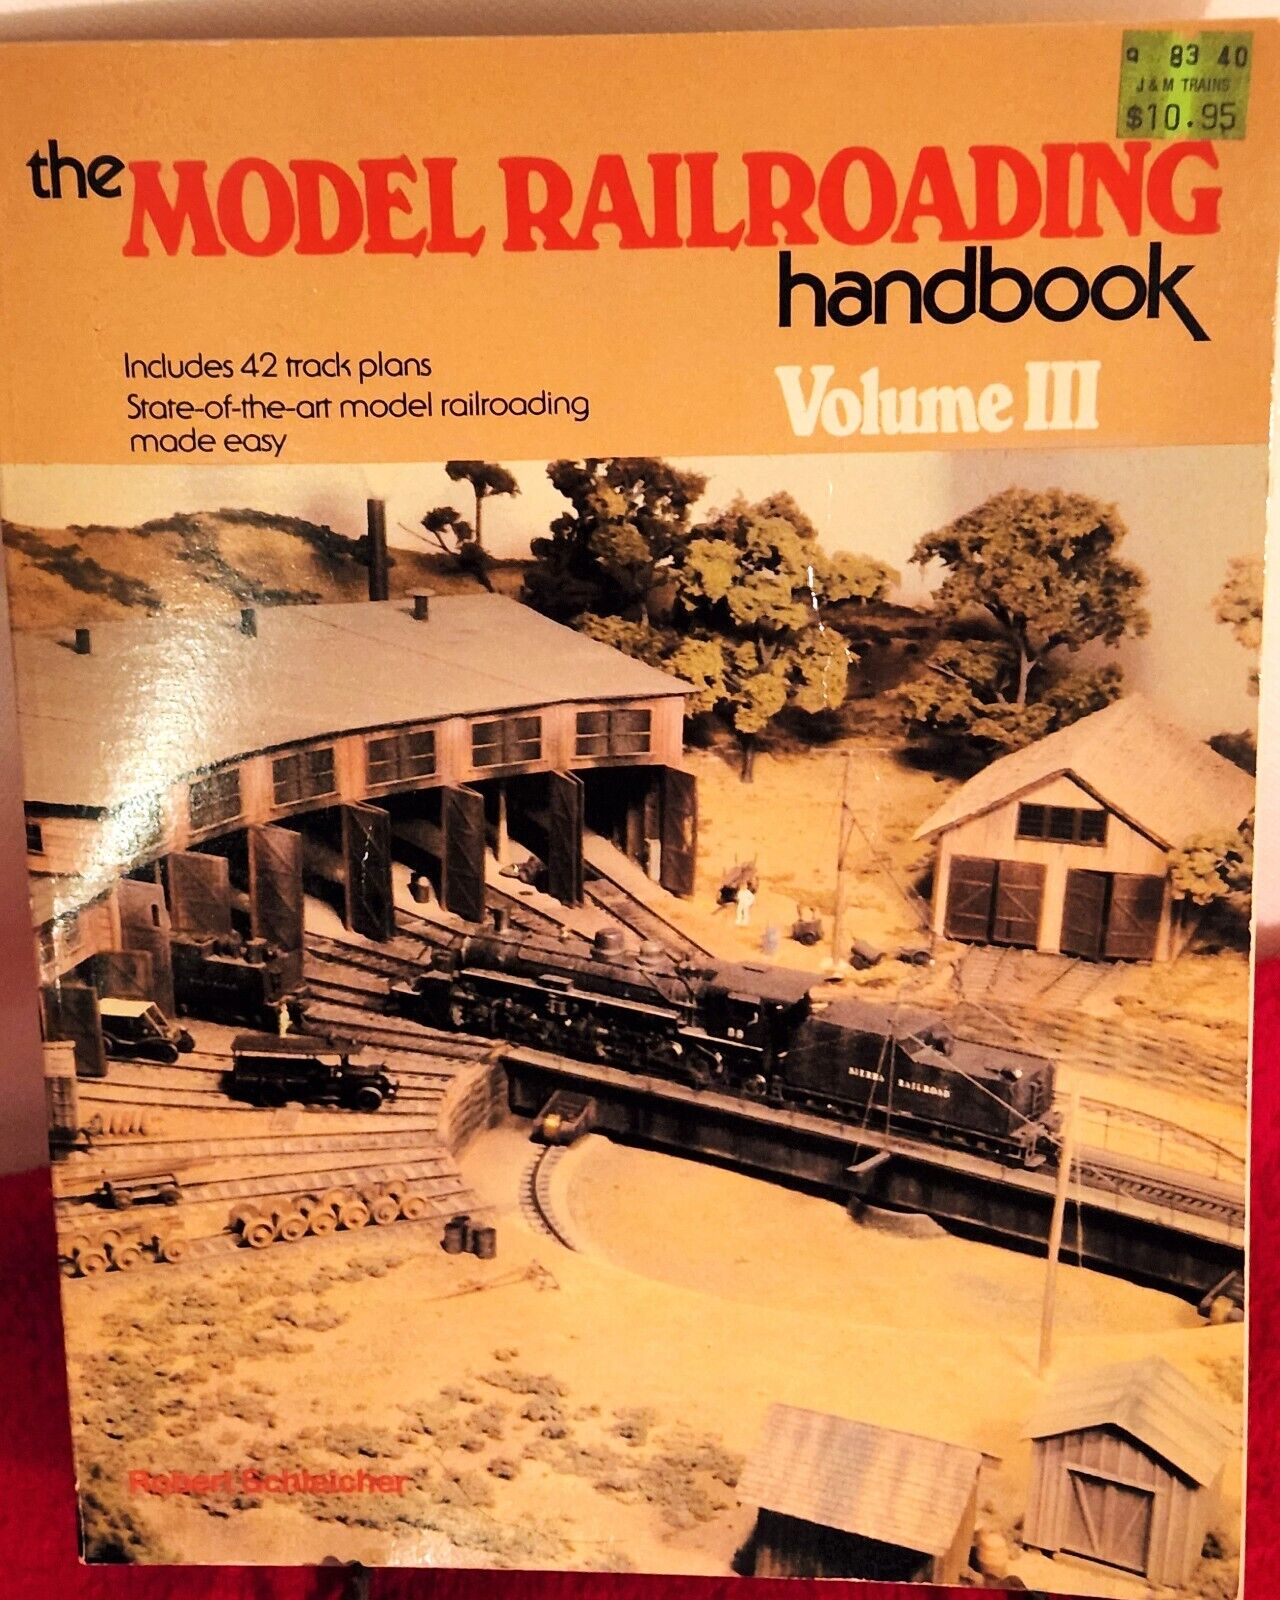 The Model Railroading Handbook Volume III